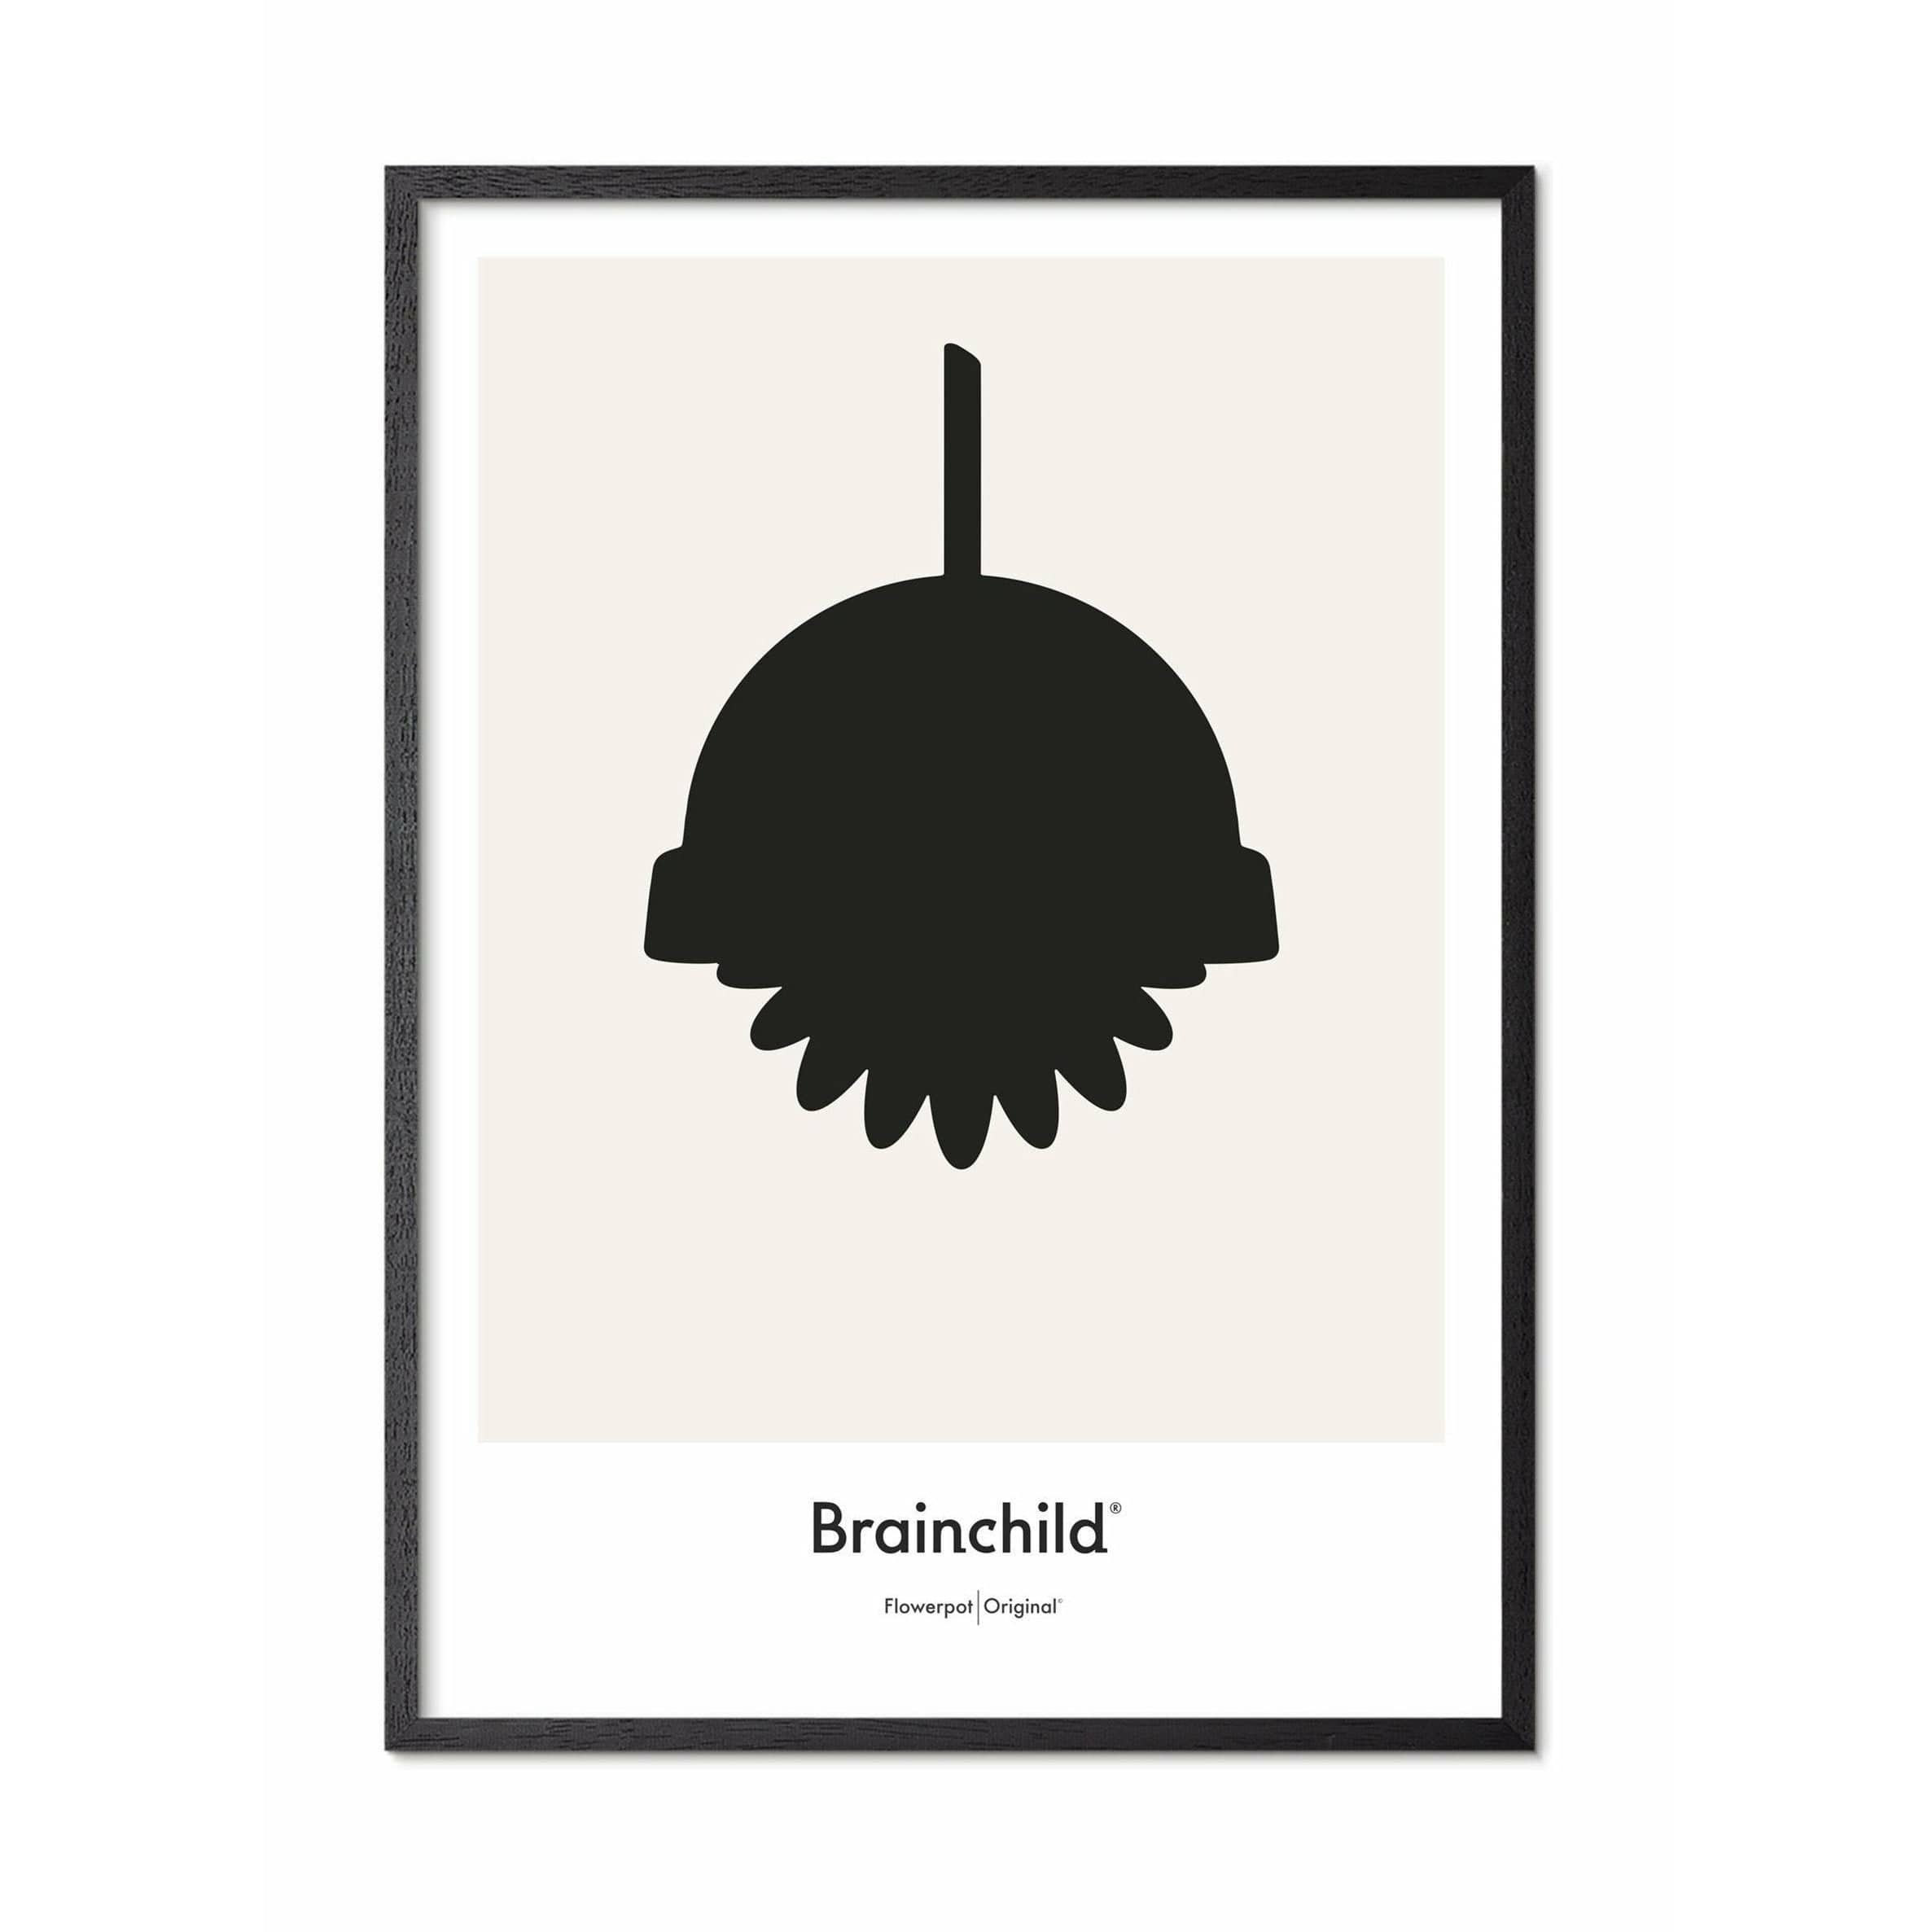 Brainchild Flower Pot Design Icon Poster, Frame In Black Lacquered Wood 30x40 Cm, Grey